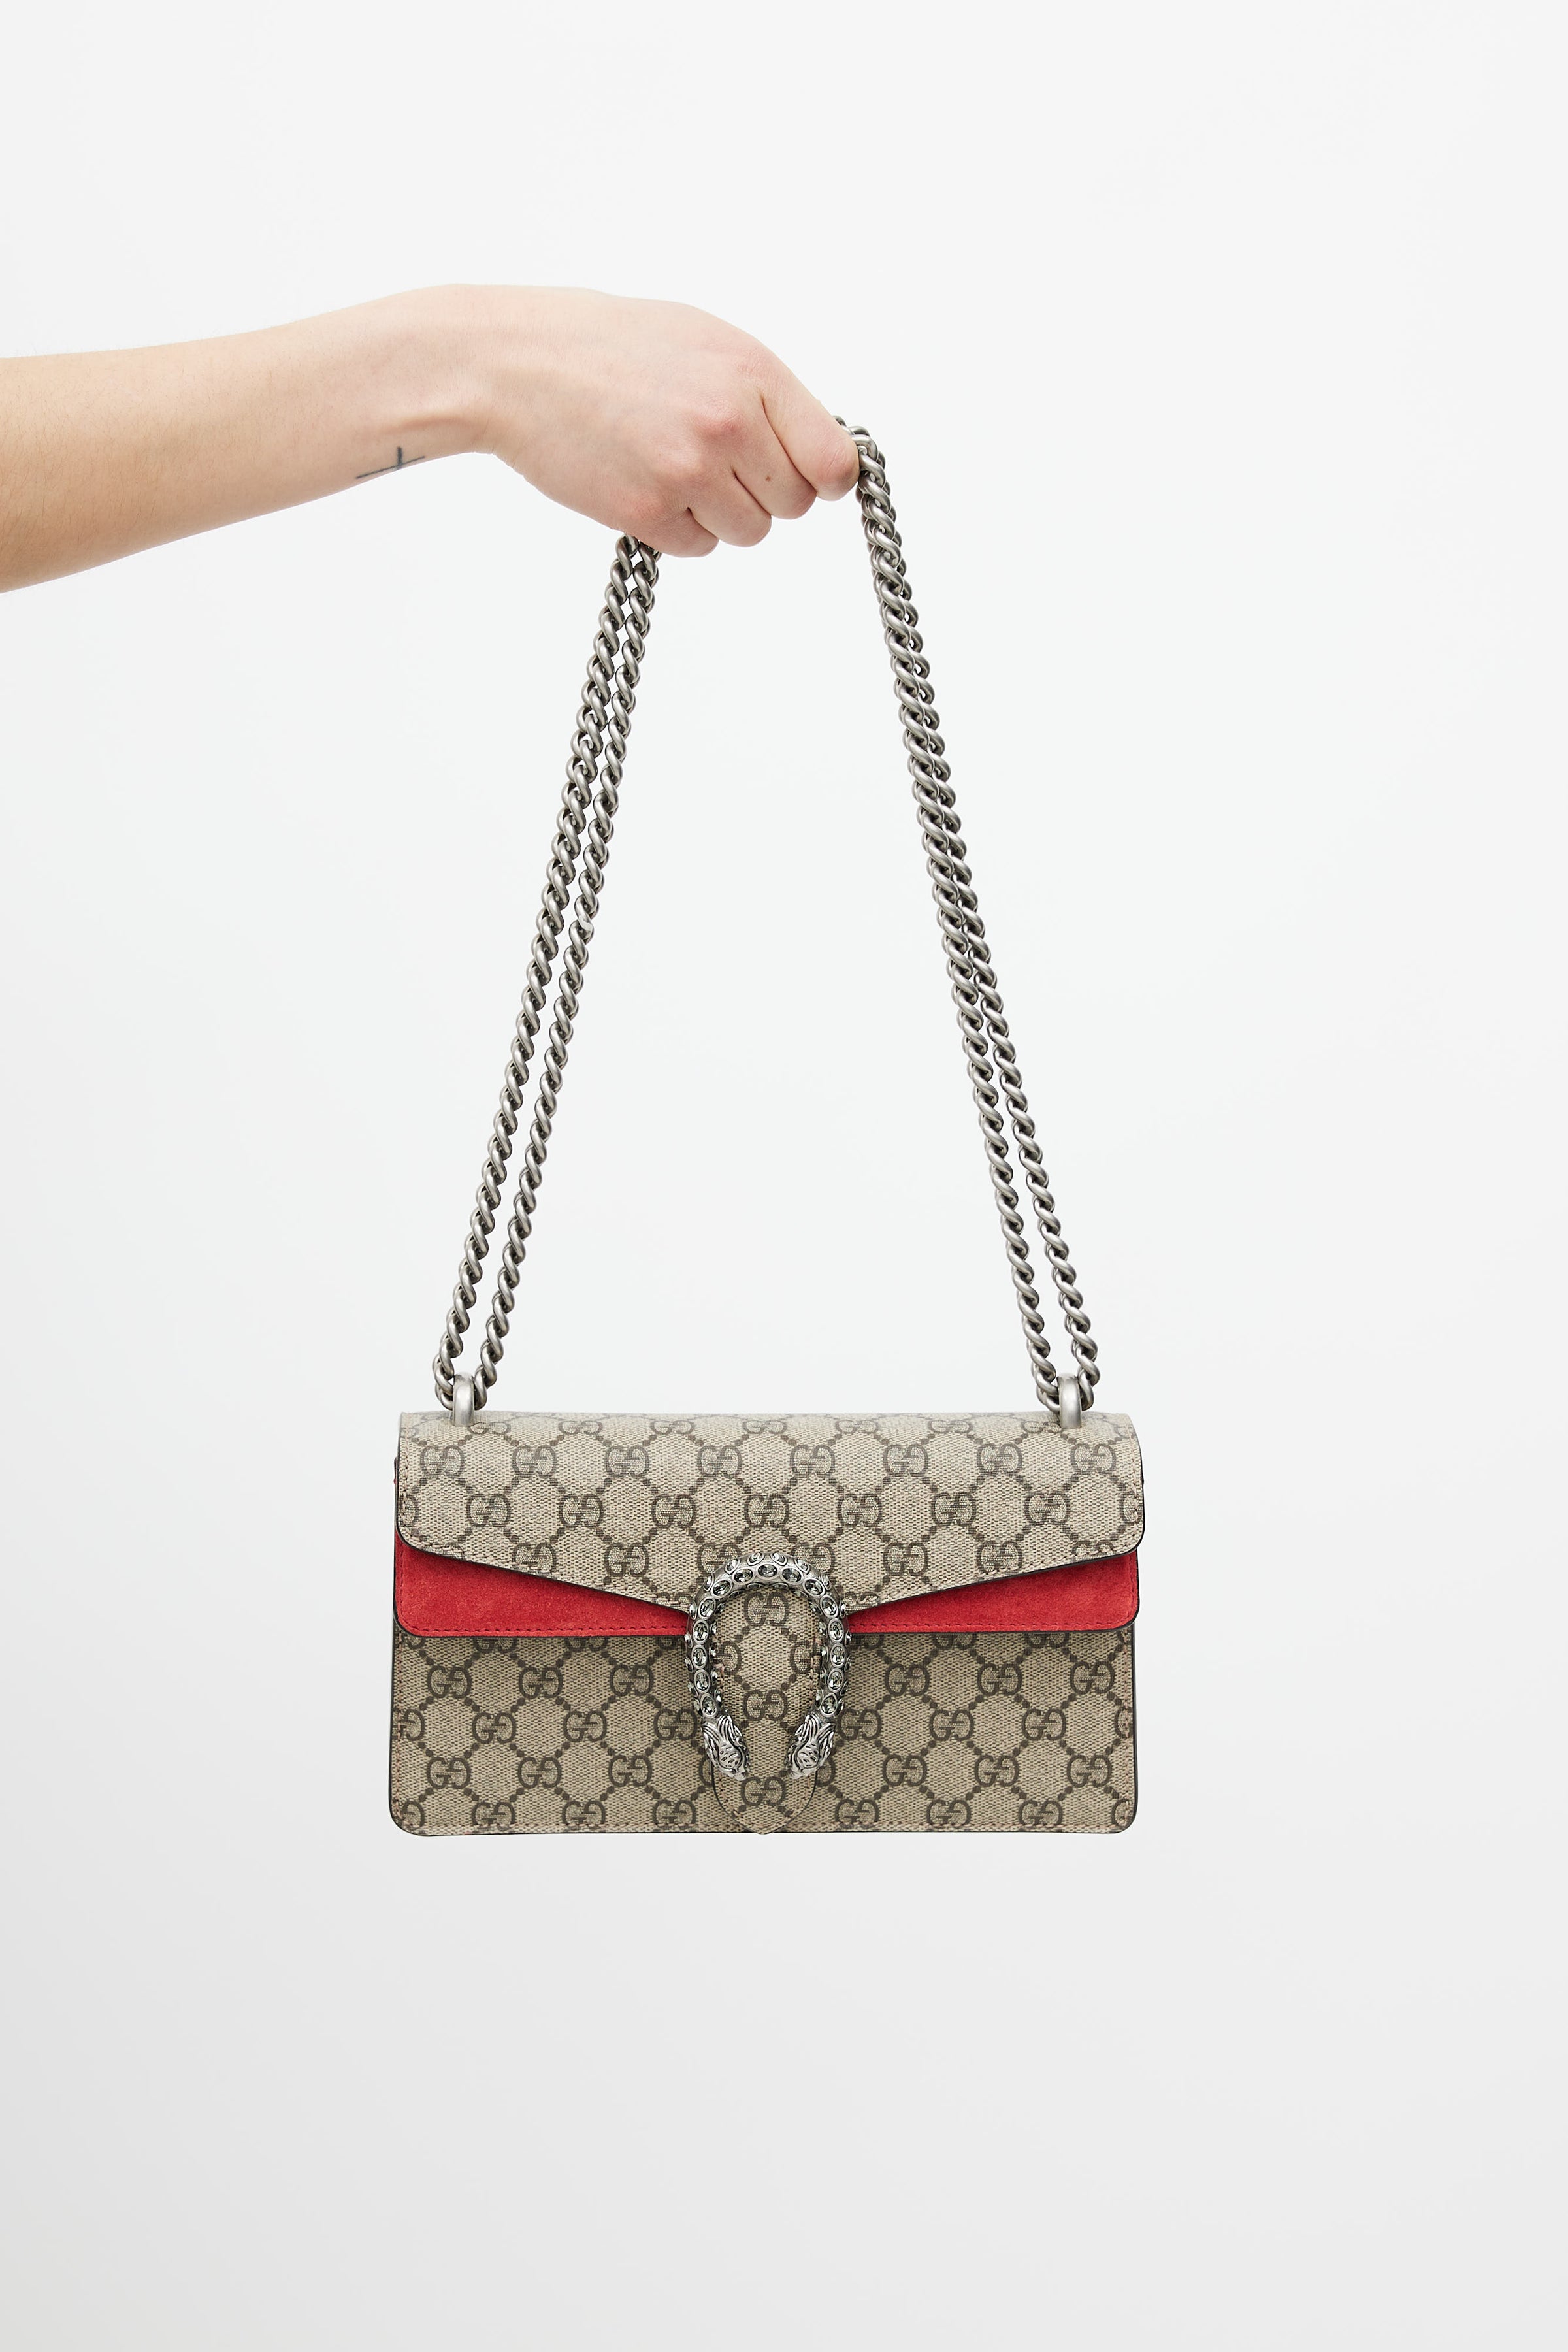 Gucci Dionysus GG Supreme Chain Shoulder Bag